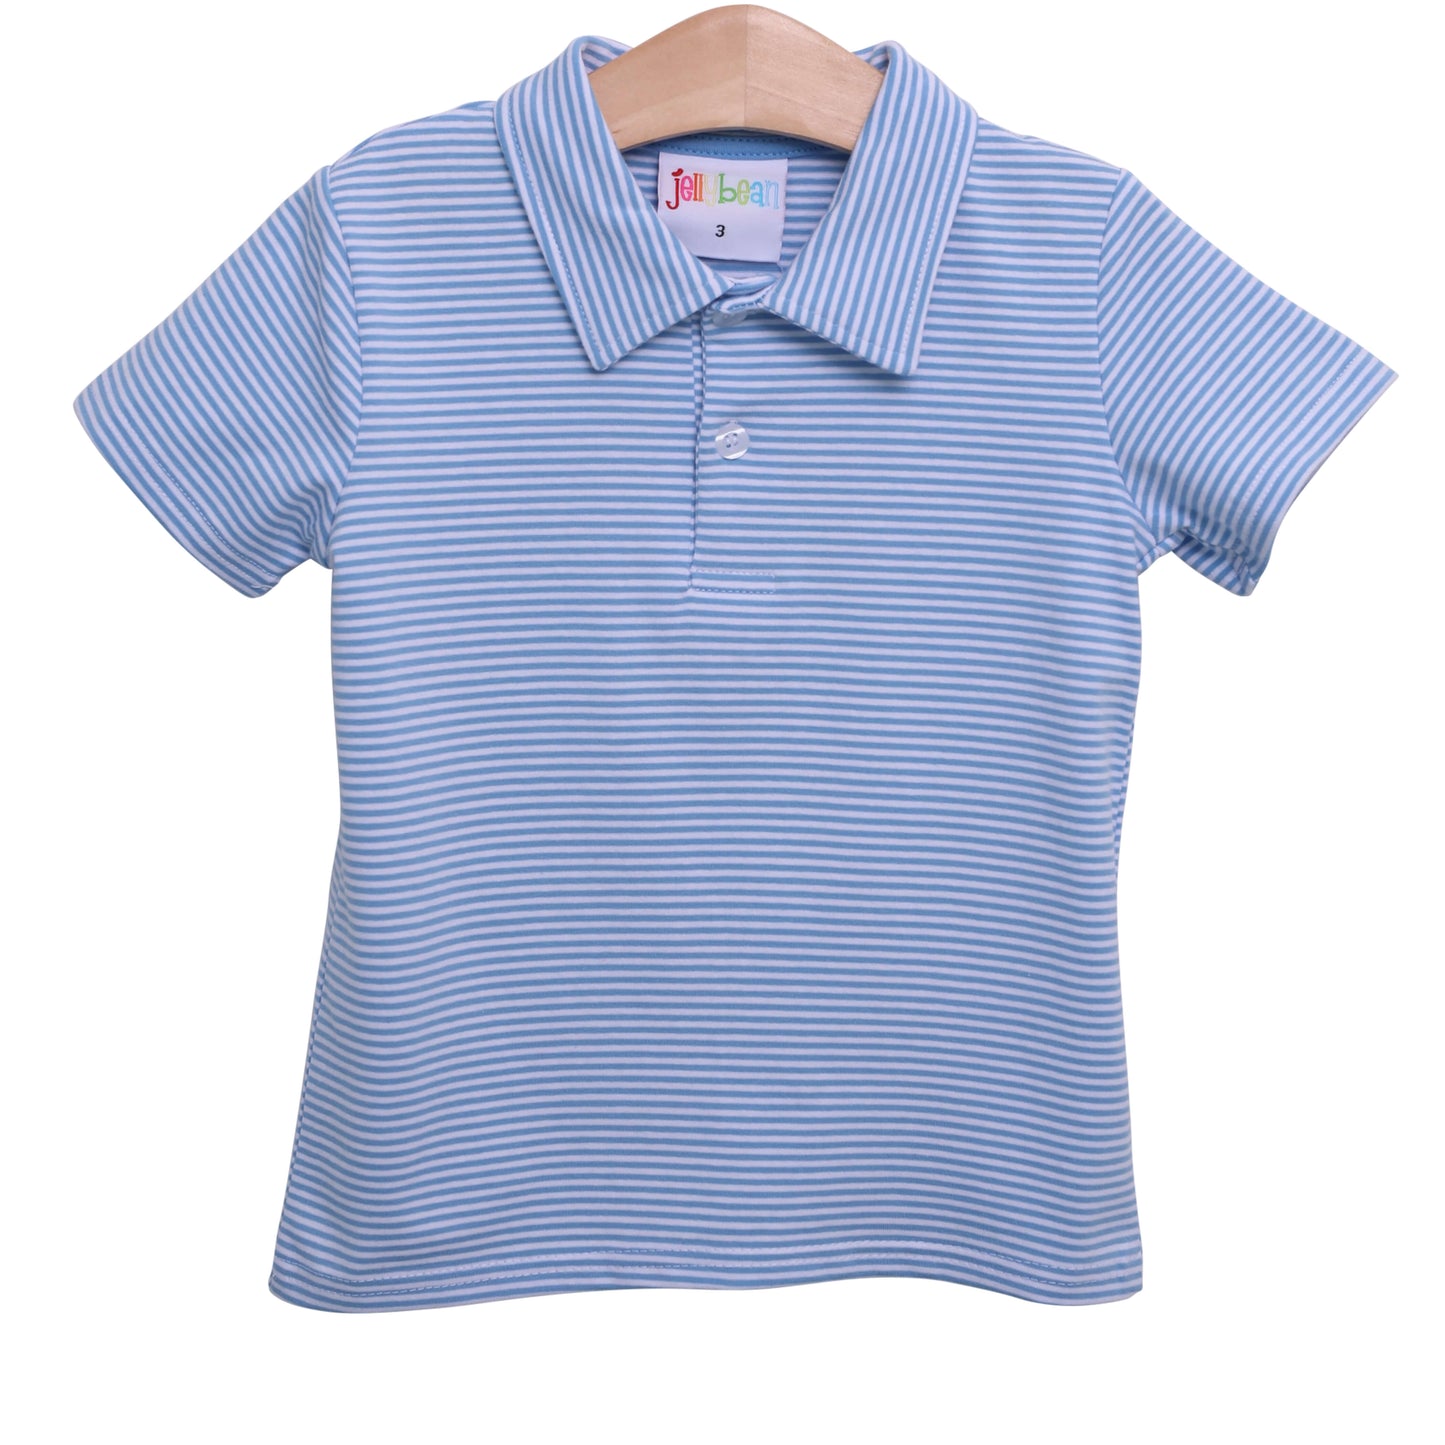 Boys Polo Shirt - Cornflower Blue Stripe